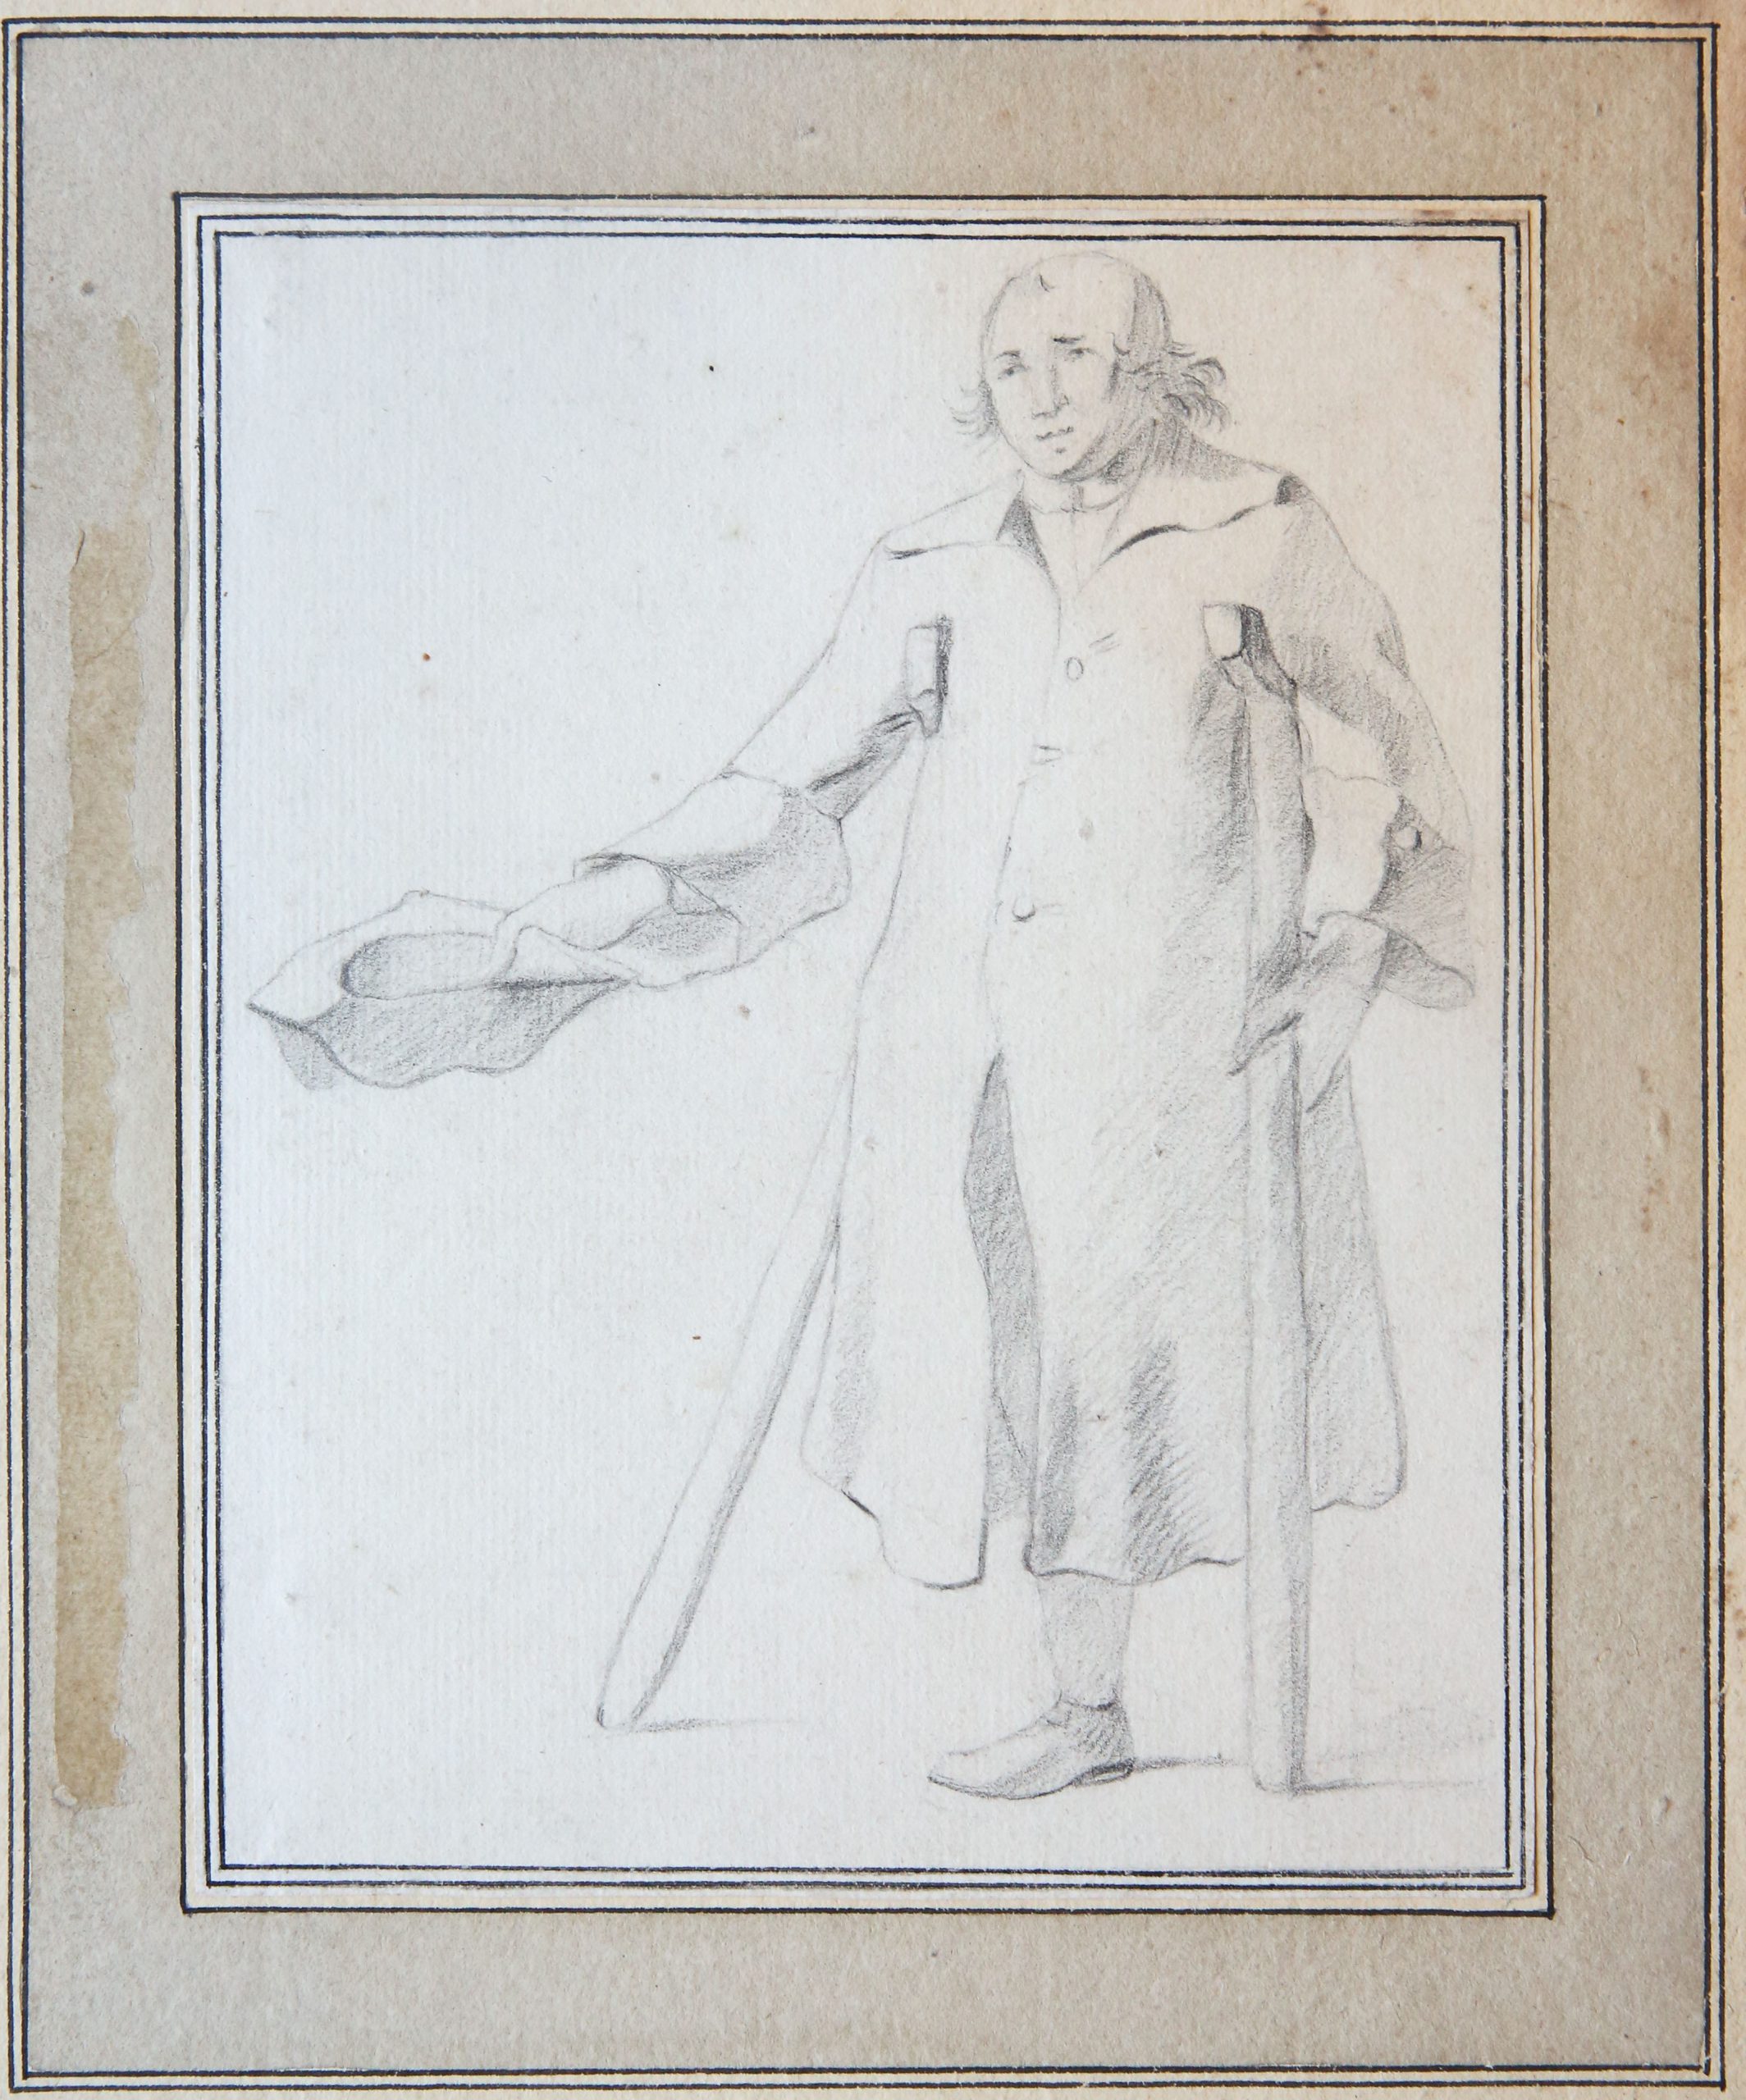 Drawing/tekening: Beggar (Bedelaar), published 1777.